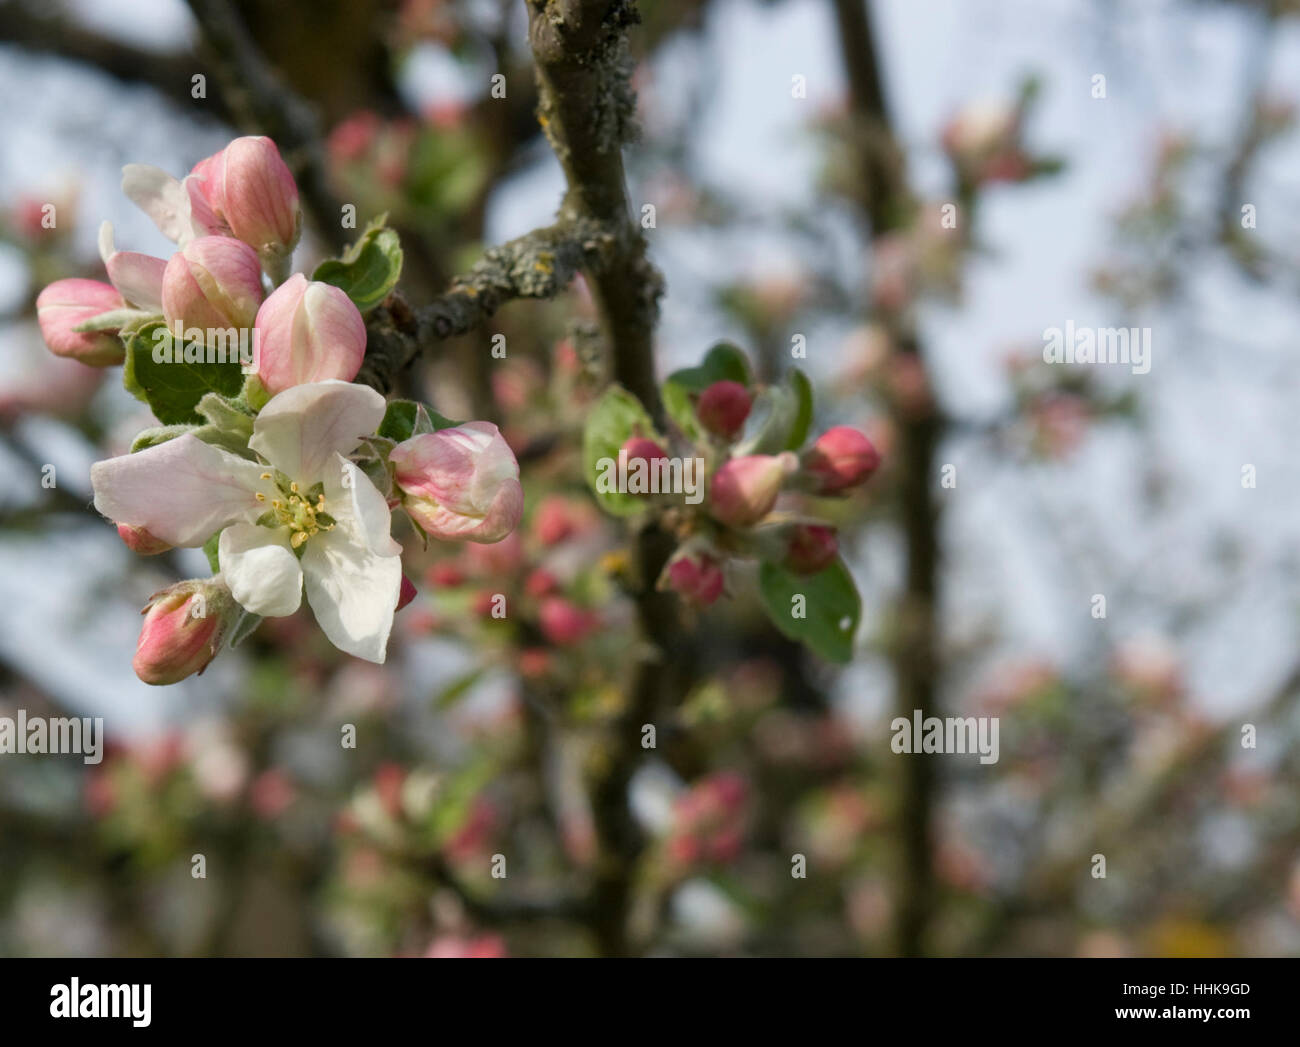 bloom, blossom, flourish, flourishing, agriculture, farming, deciduous tree, Stock Photo